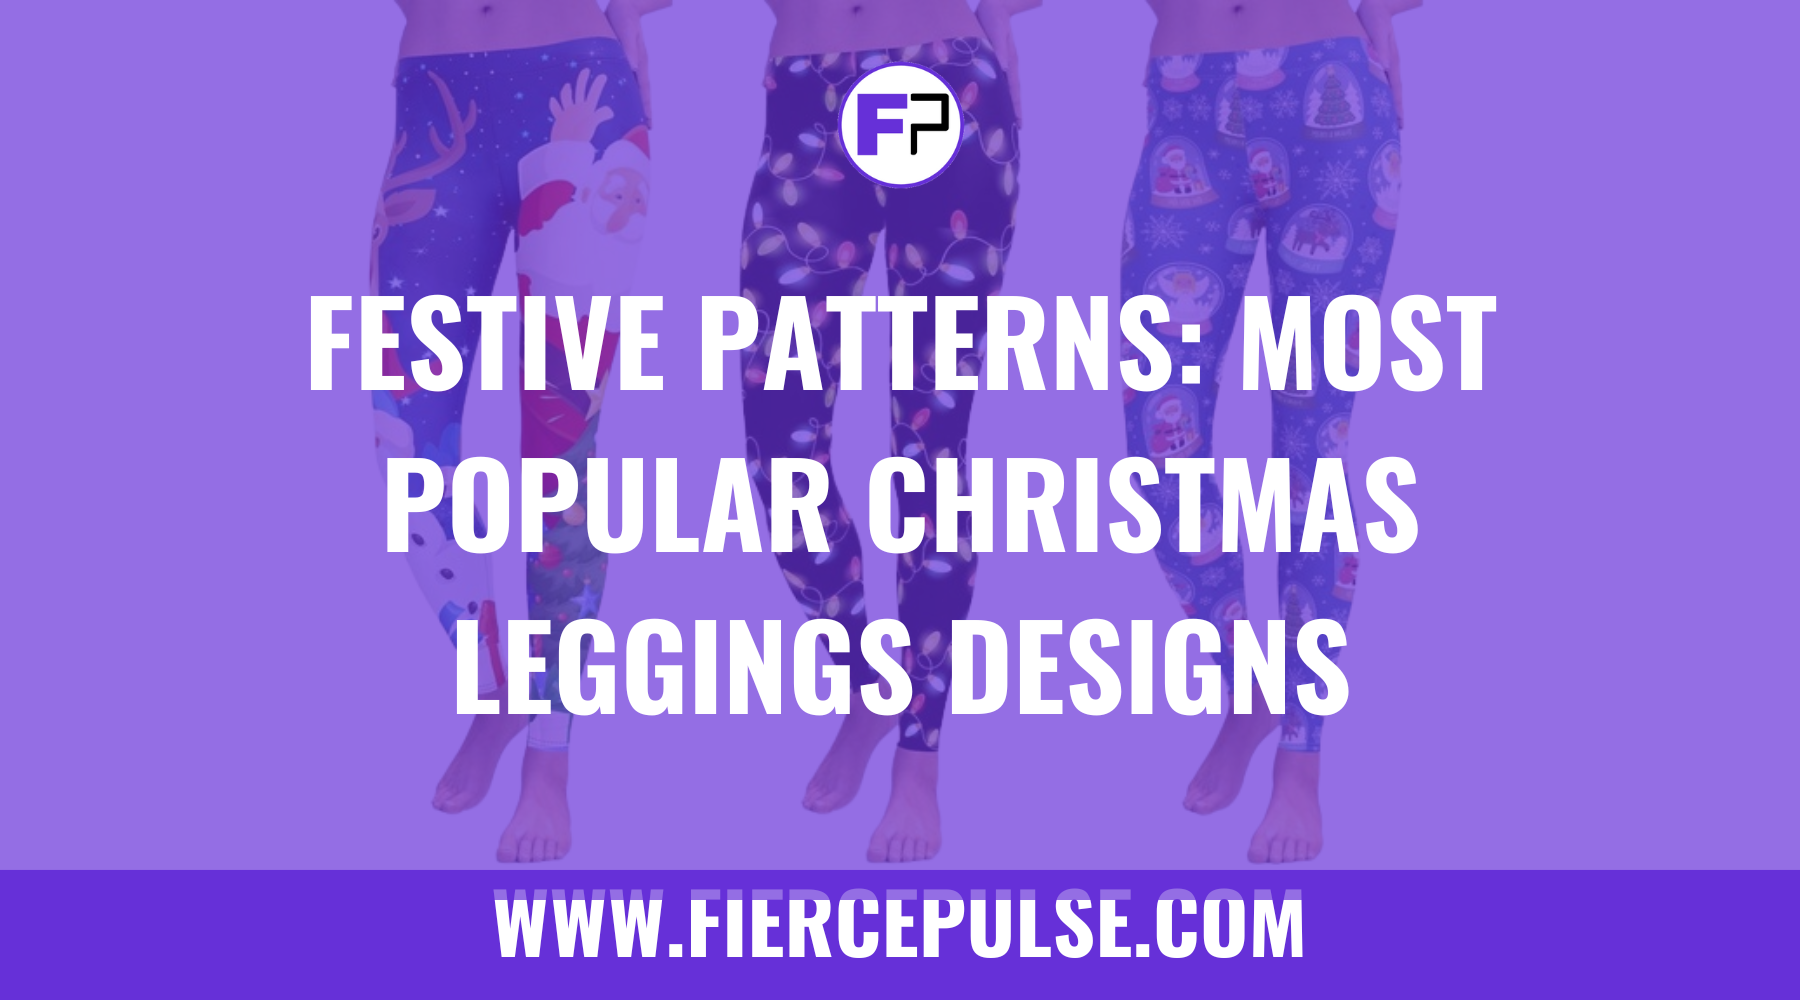 Festive Patterns: Most Popular Christmas Leggings Designs